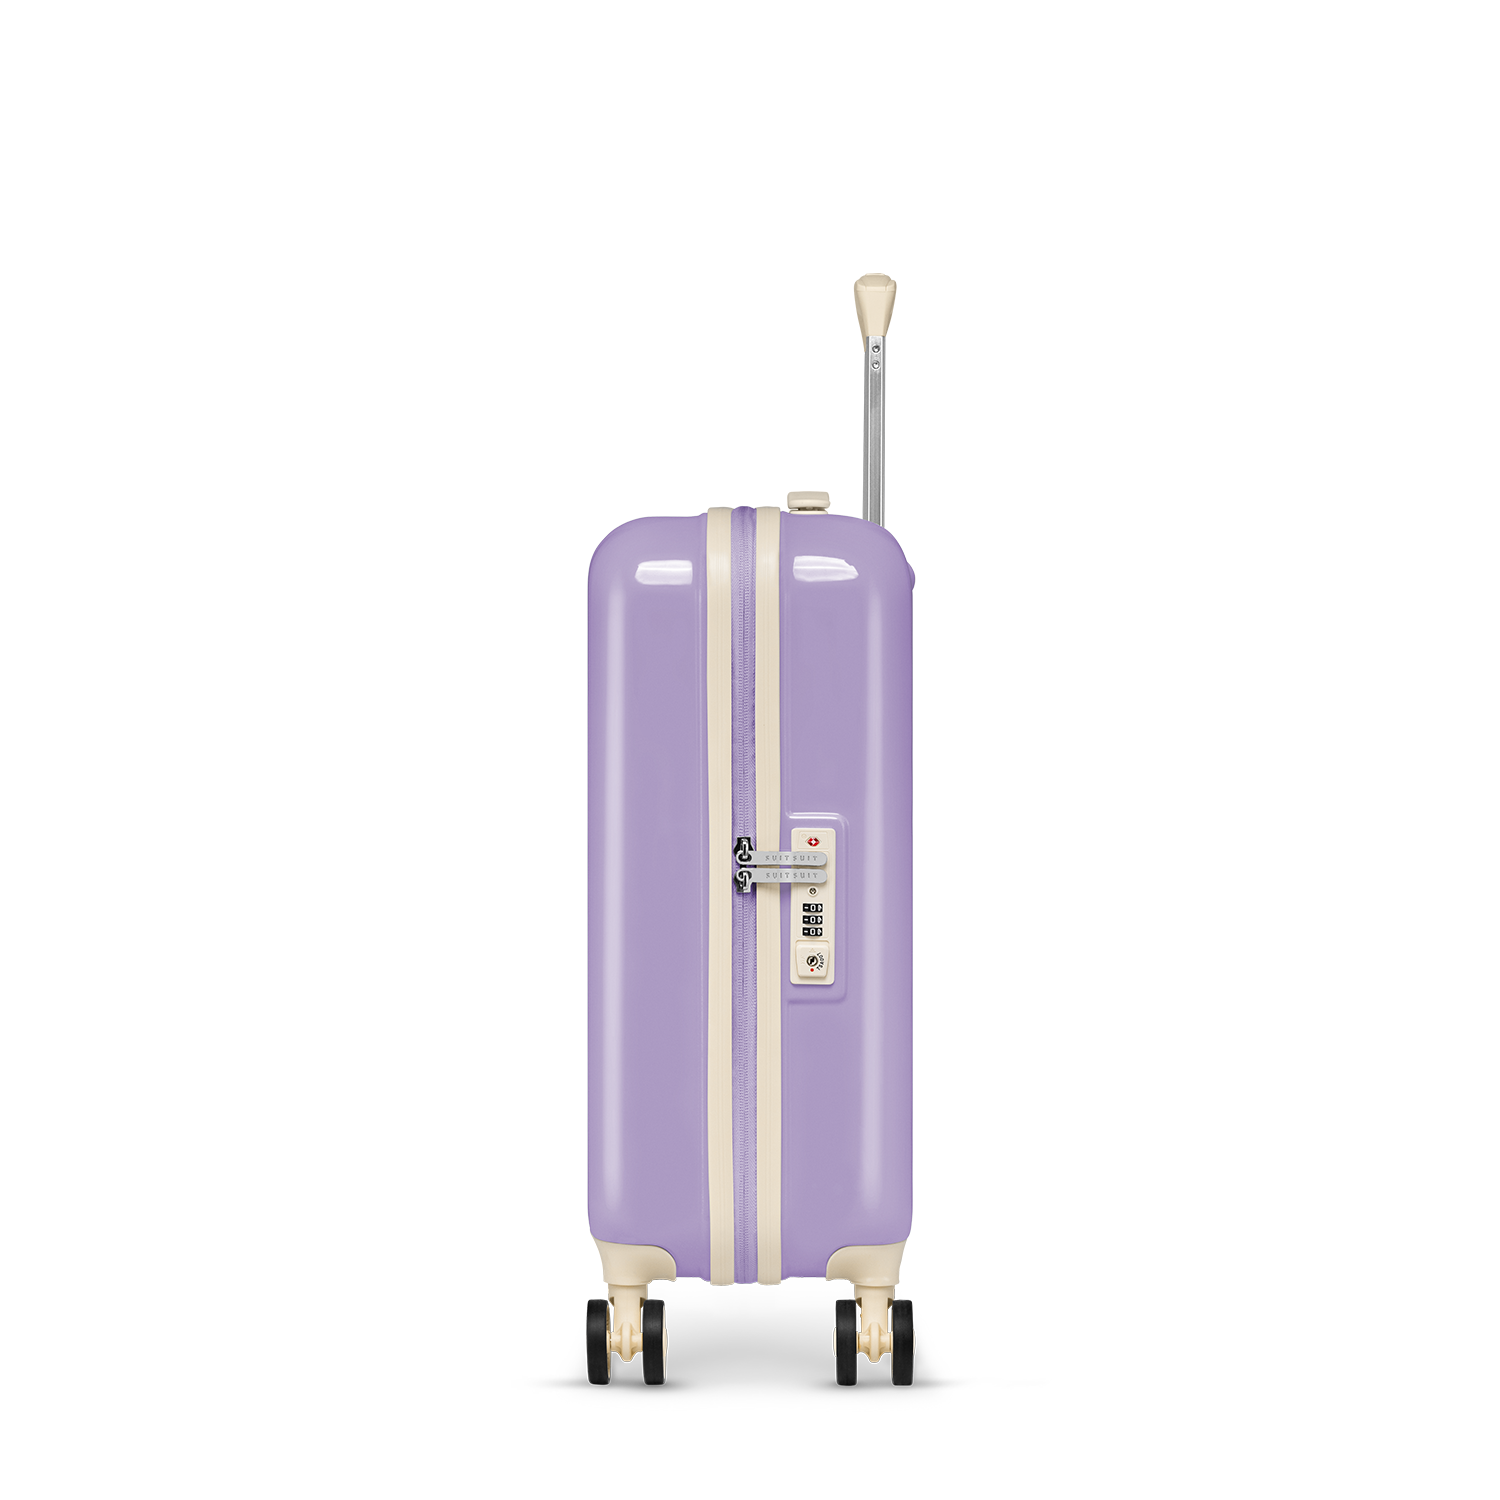 Fabulous Fifties - Royal Lavender - Handgepäck (55 cm)